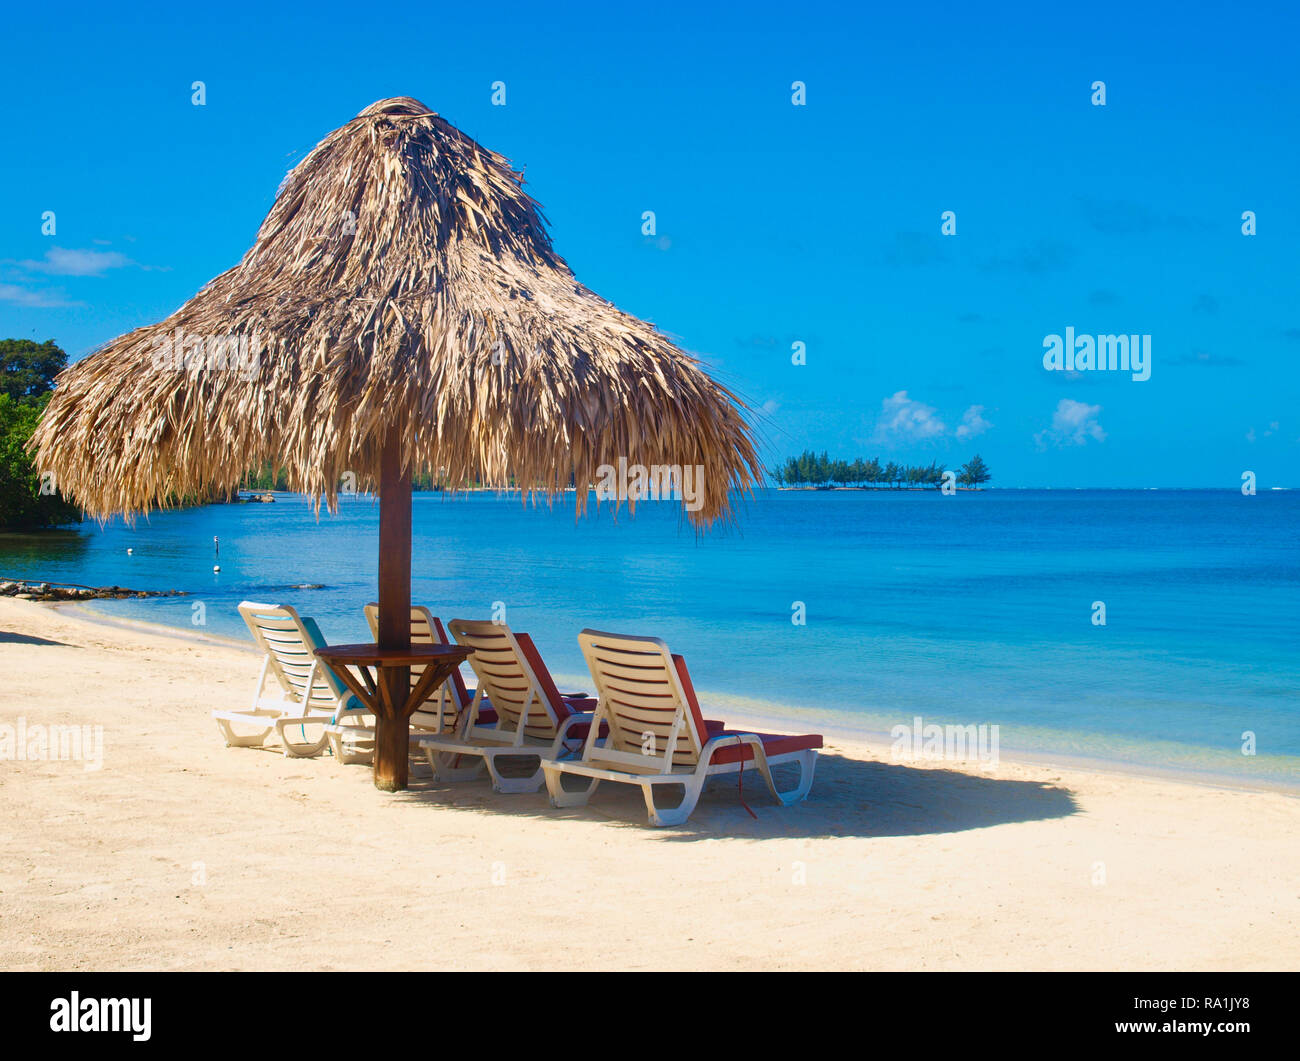 Palapa and Chairs on the beach. Roatan island Stock Photo